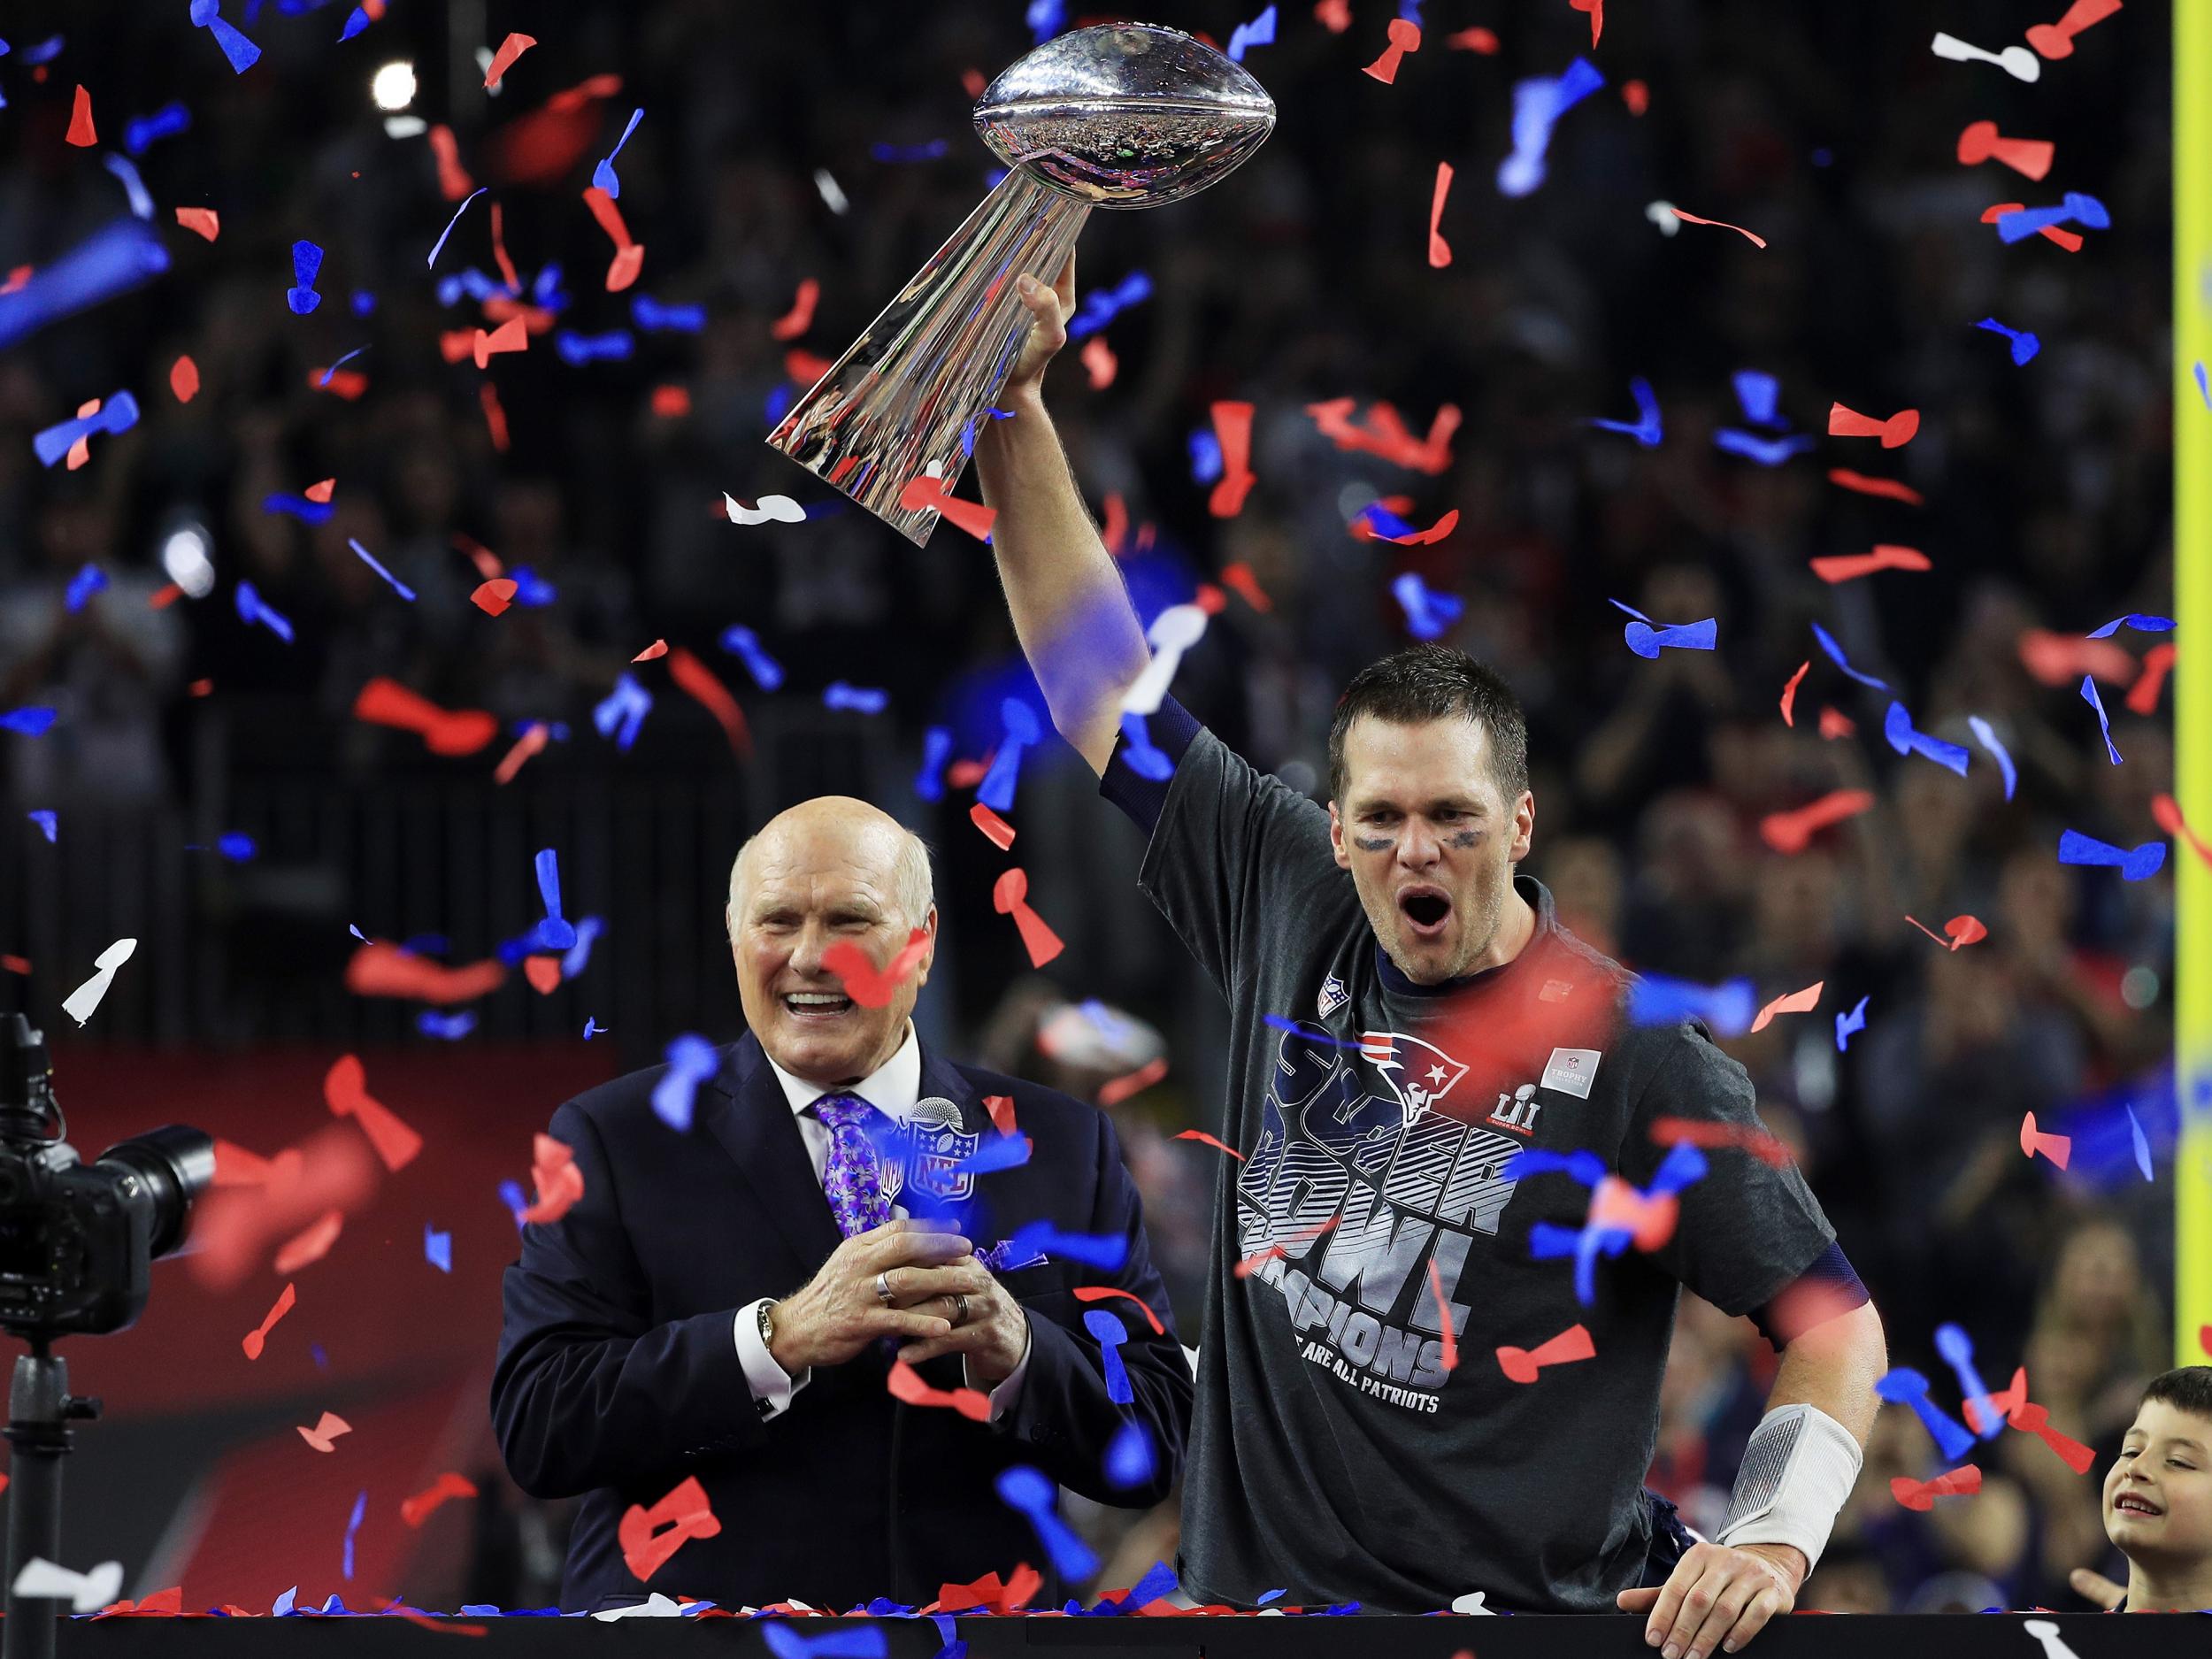 Brady won his fifth Super Bowl ring